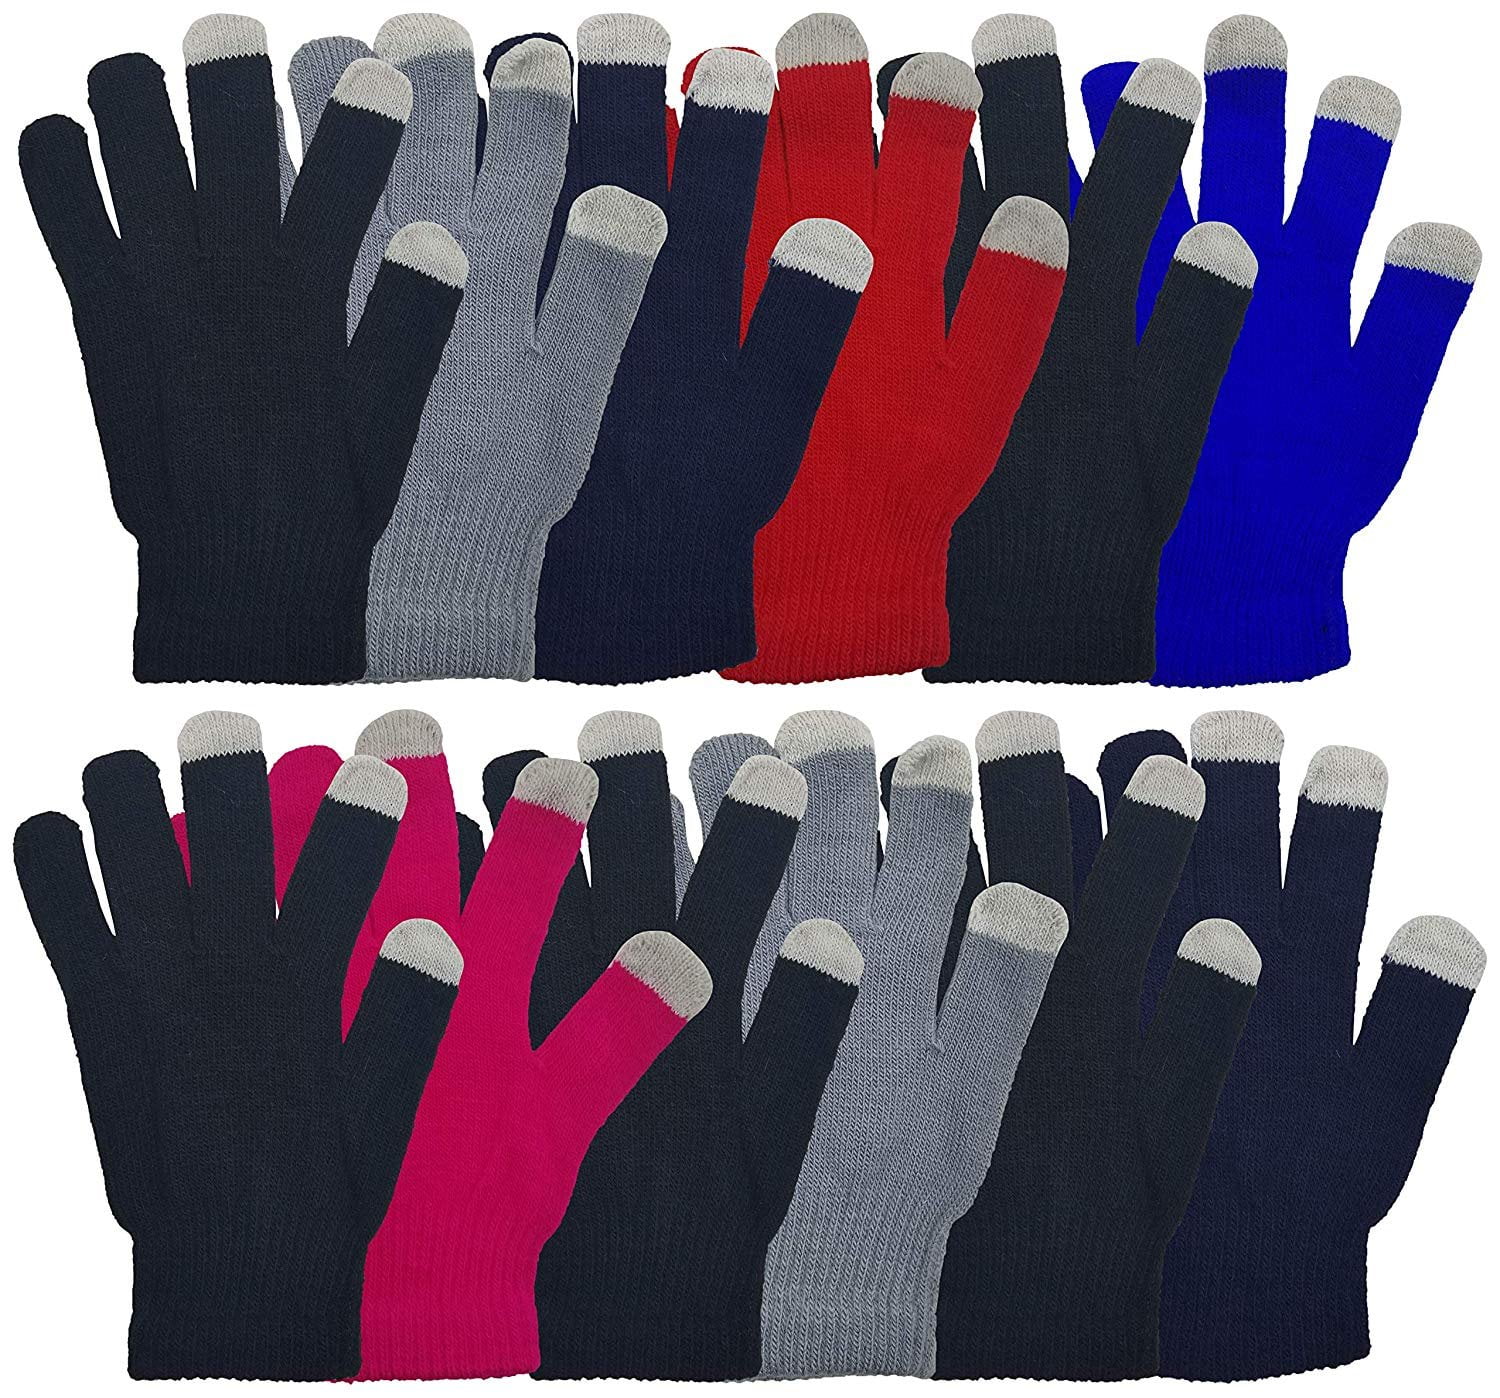 BoyzToys Winter Knitted Touchscreen Gloves Keep Your Hands Warm 